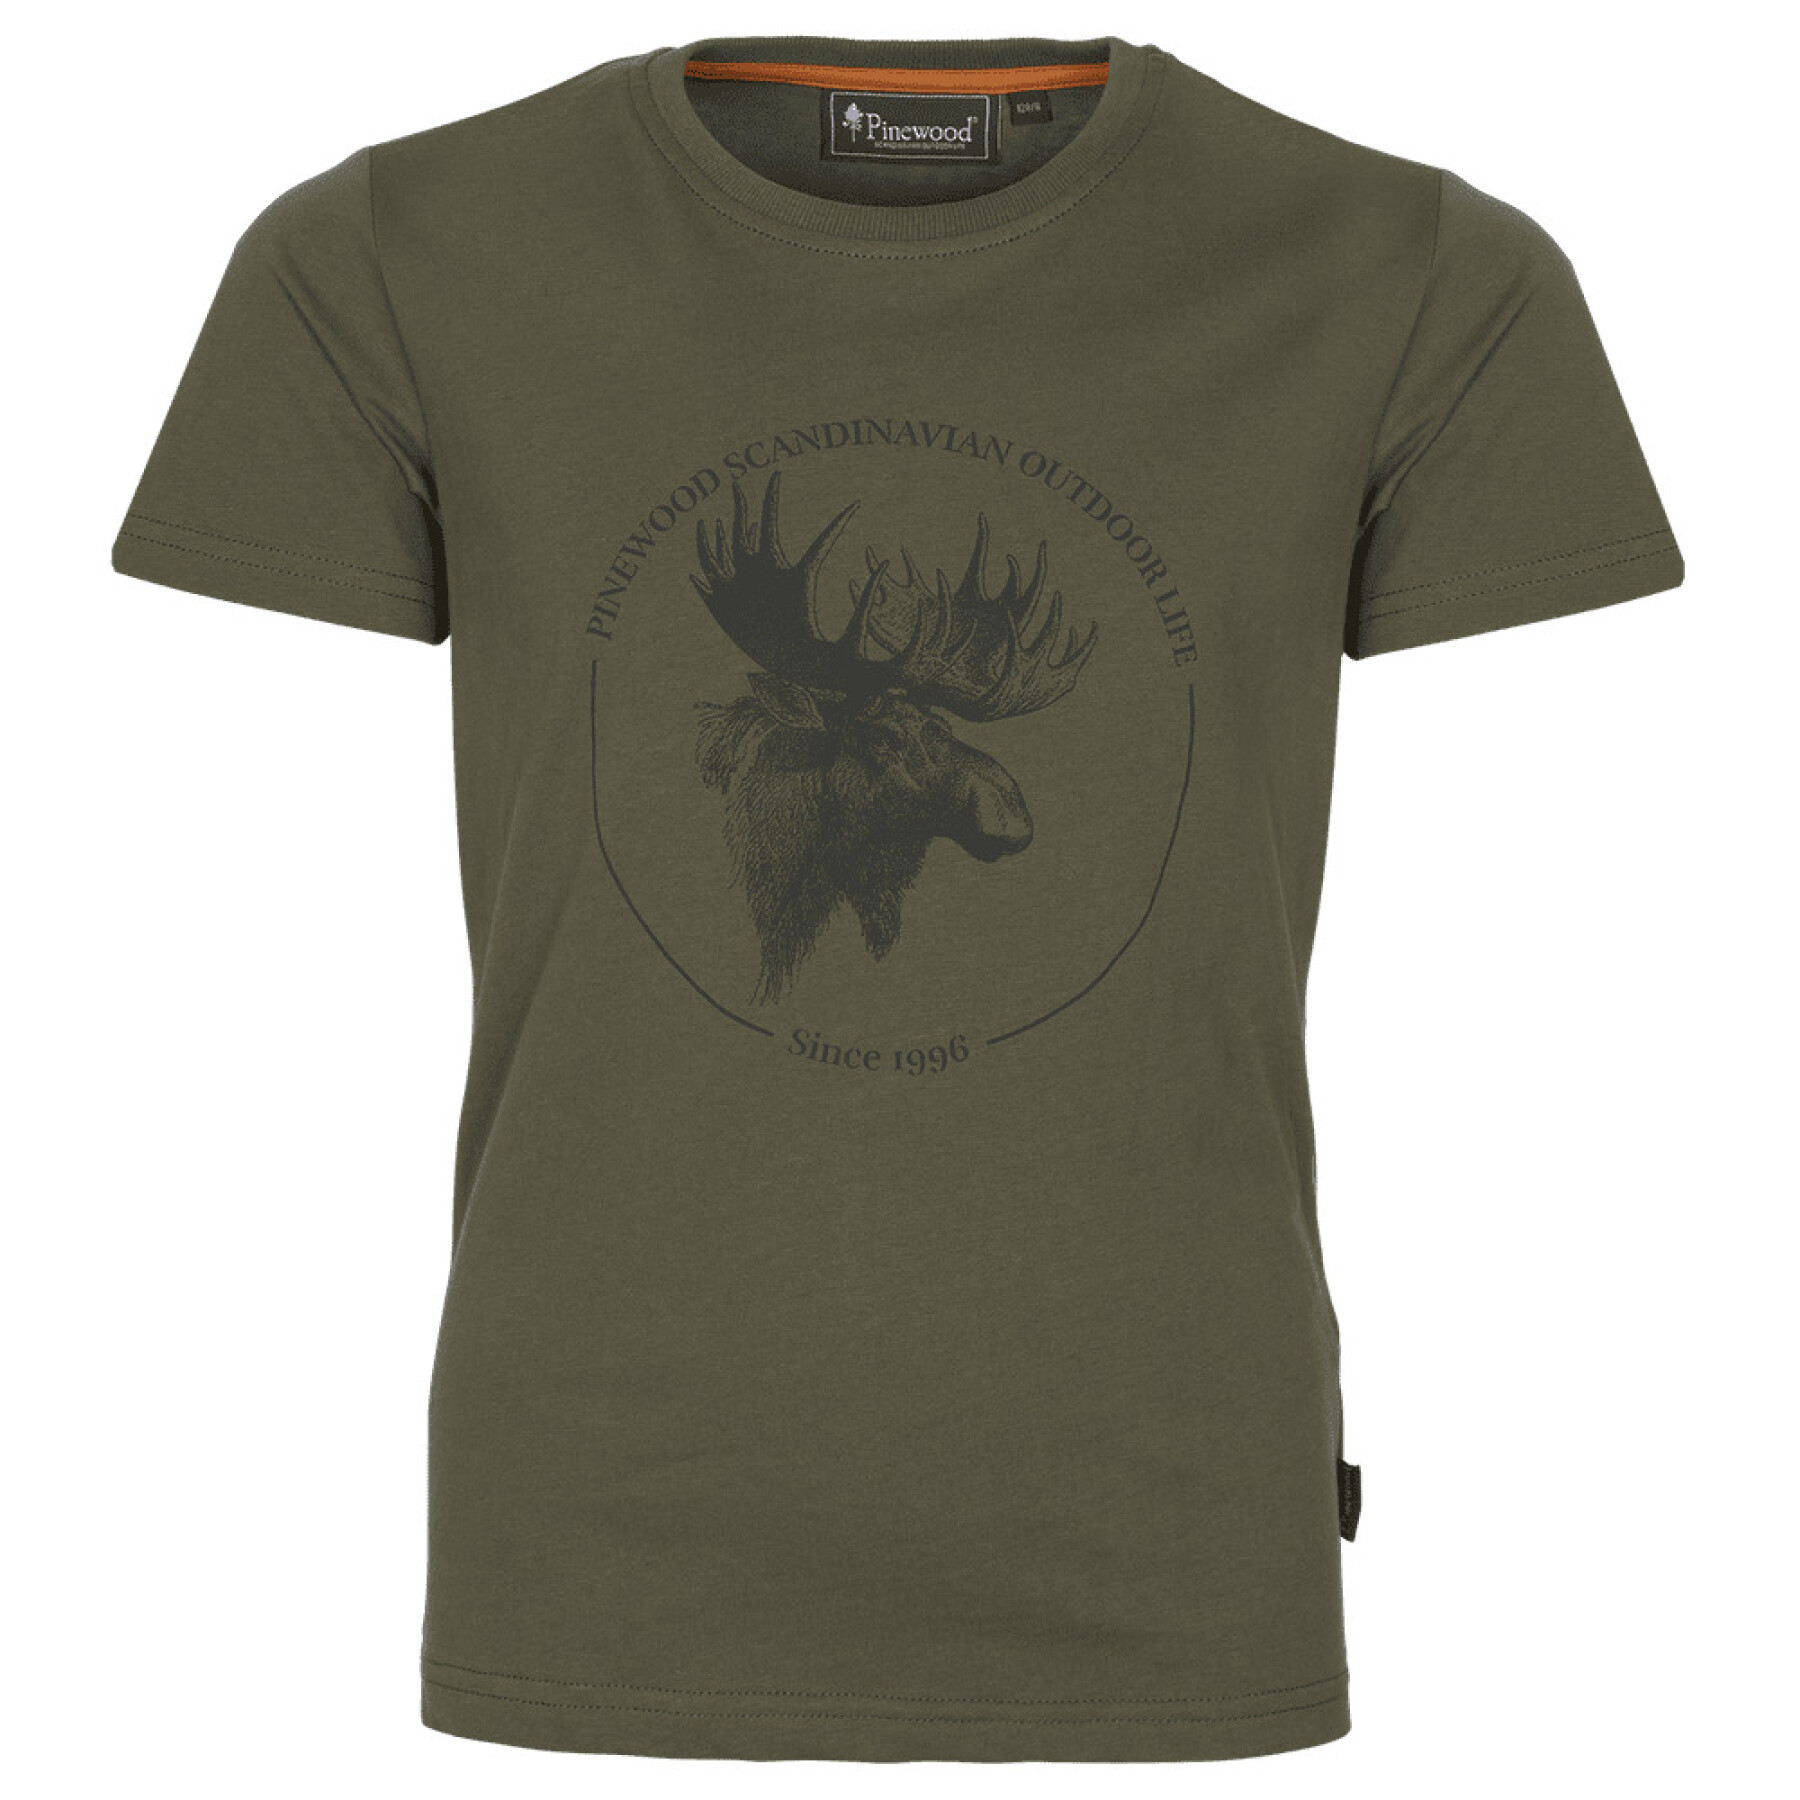 Kinder-T-shirt Pinewood Moose